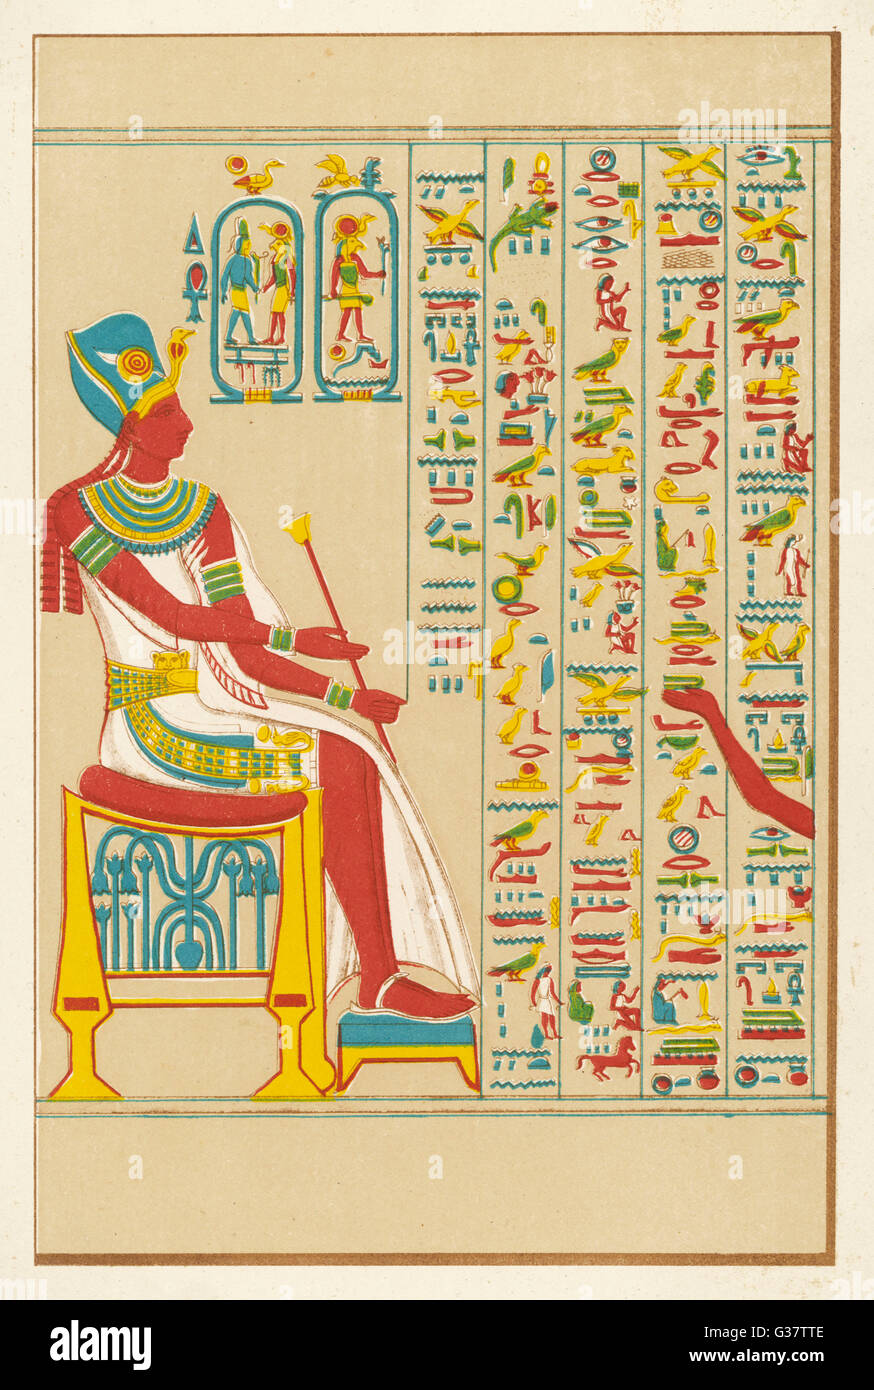 EGYPTIAN HIEROGLYPHICS Stock Photo